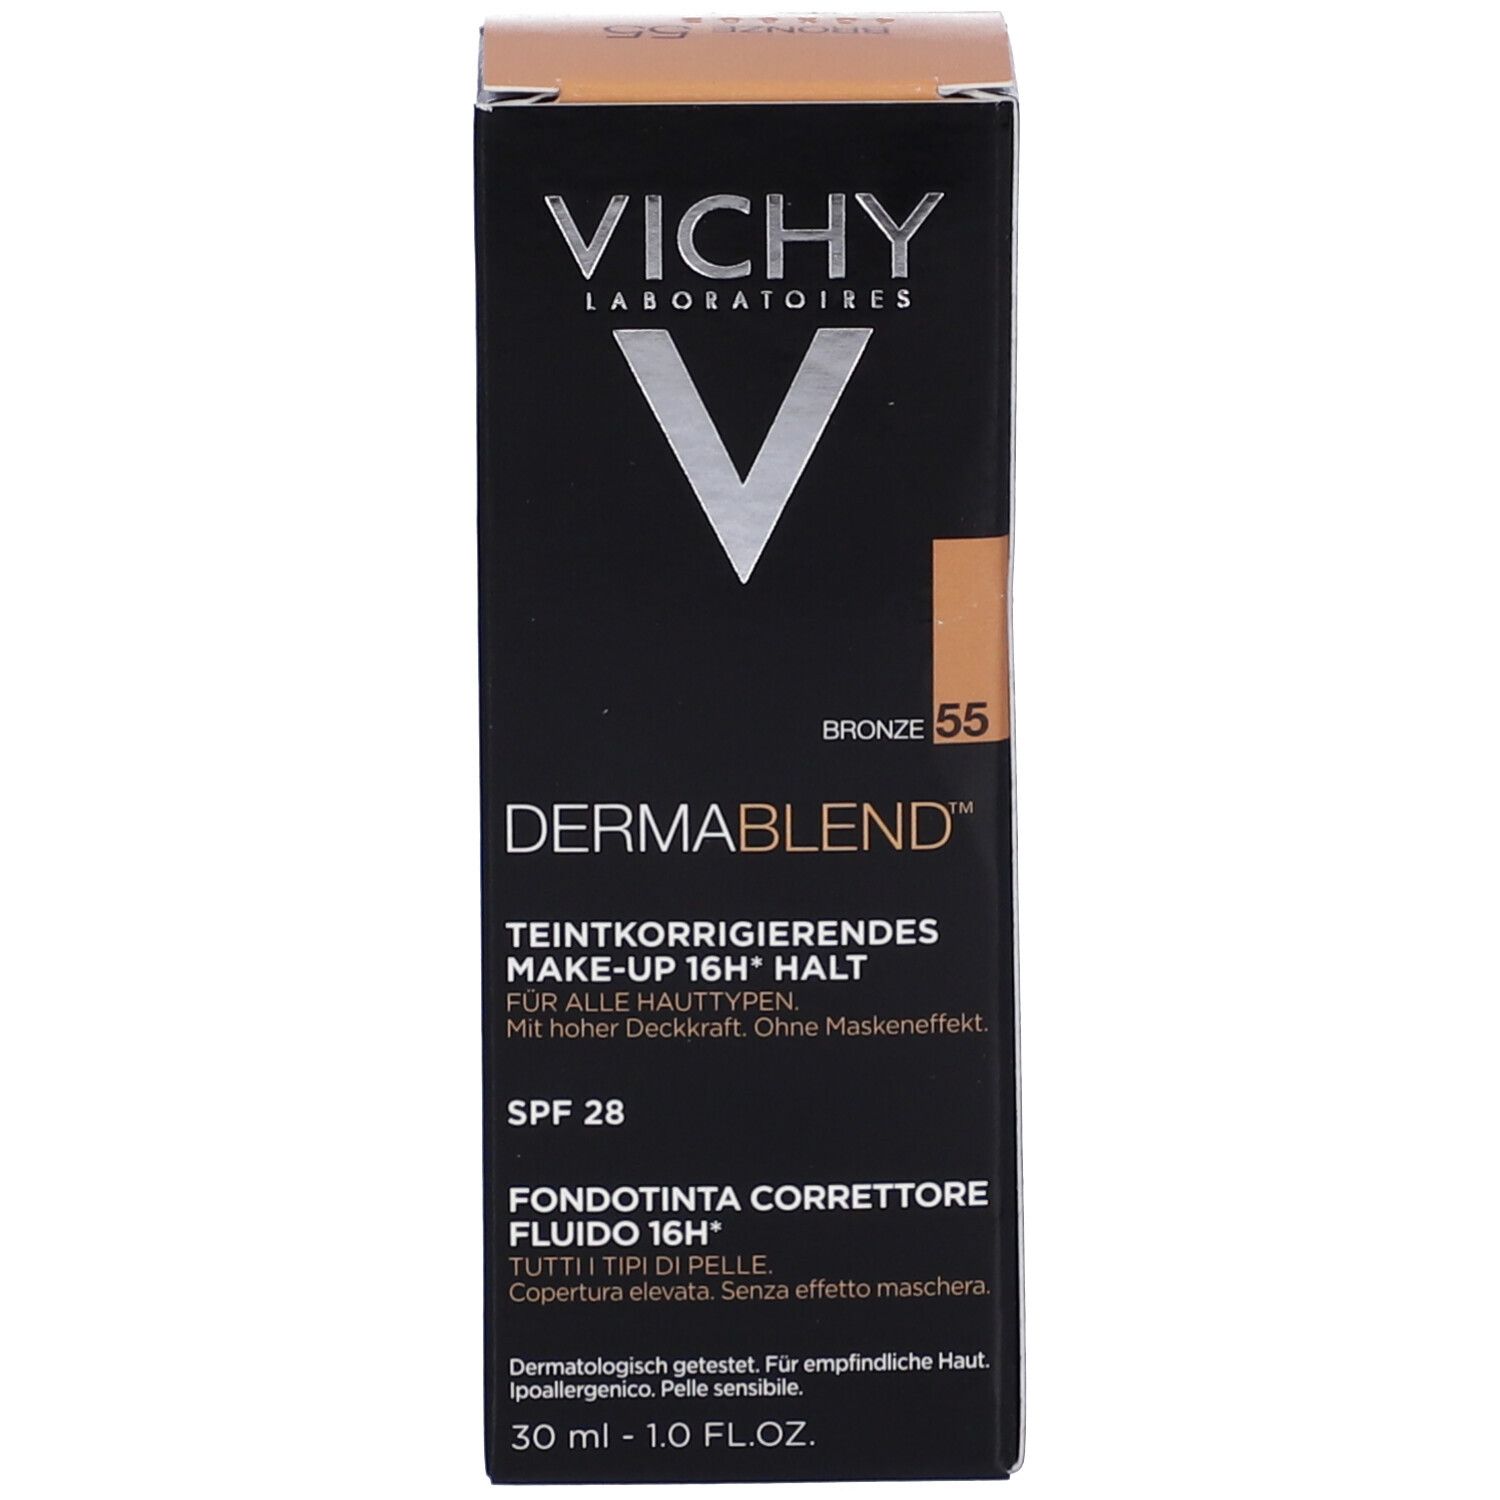 Vichy Dermablend Fondotinta Correttore Fluido 16h tonalità 55 30 ml